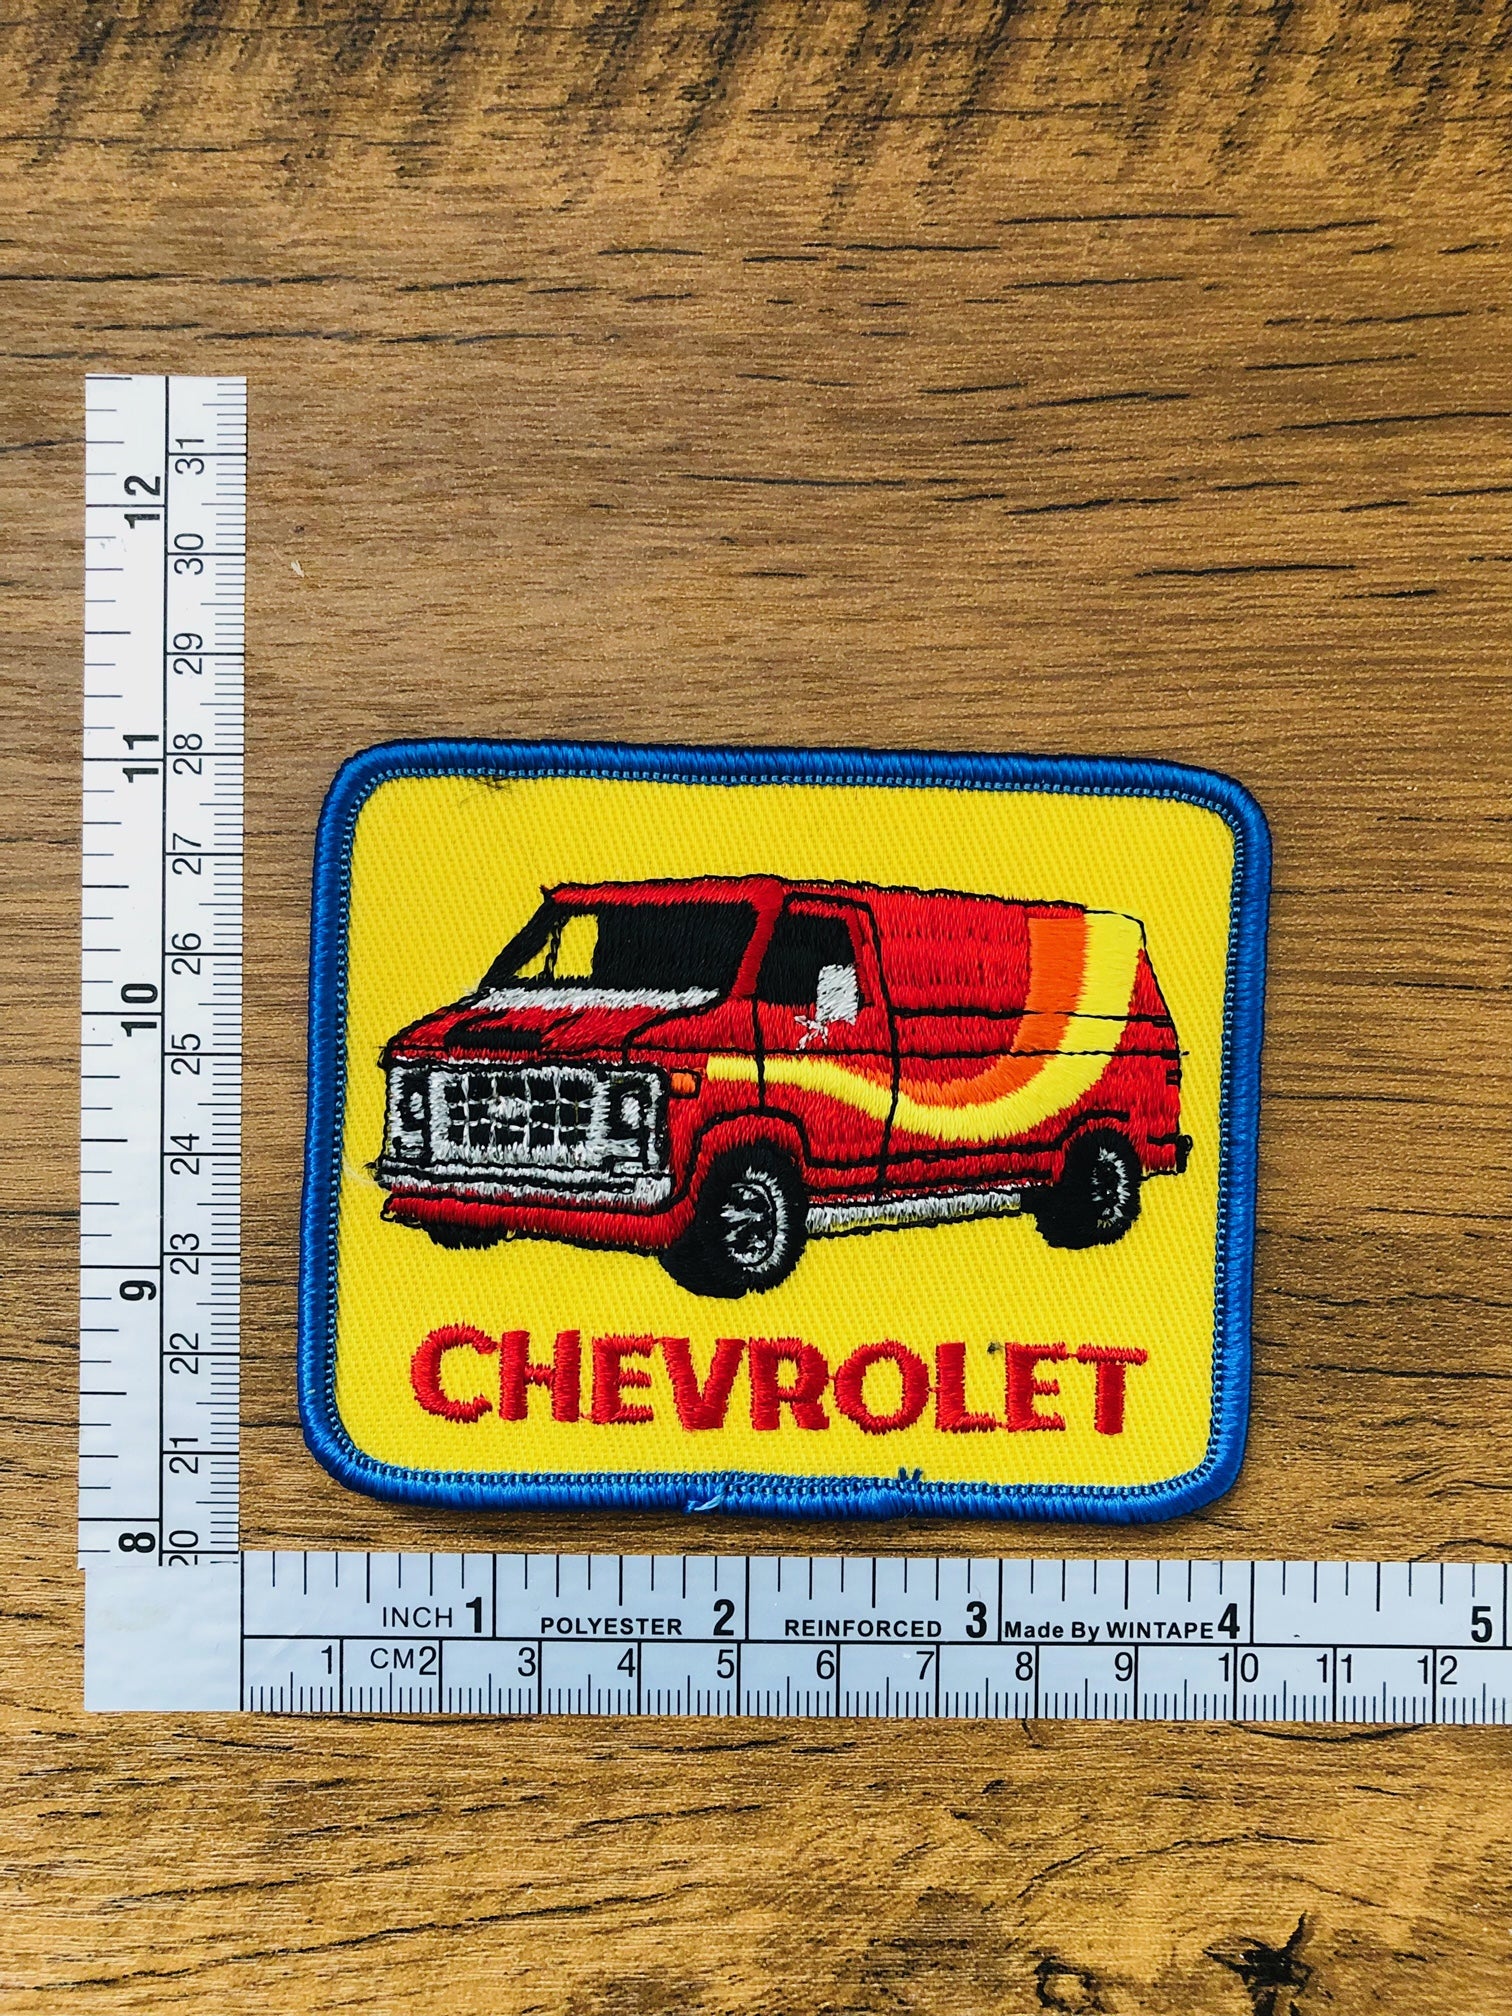 Vintage Chevrolet, Chevy Trucks, Cars, Automobiles, Pickup, Pick Ups